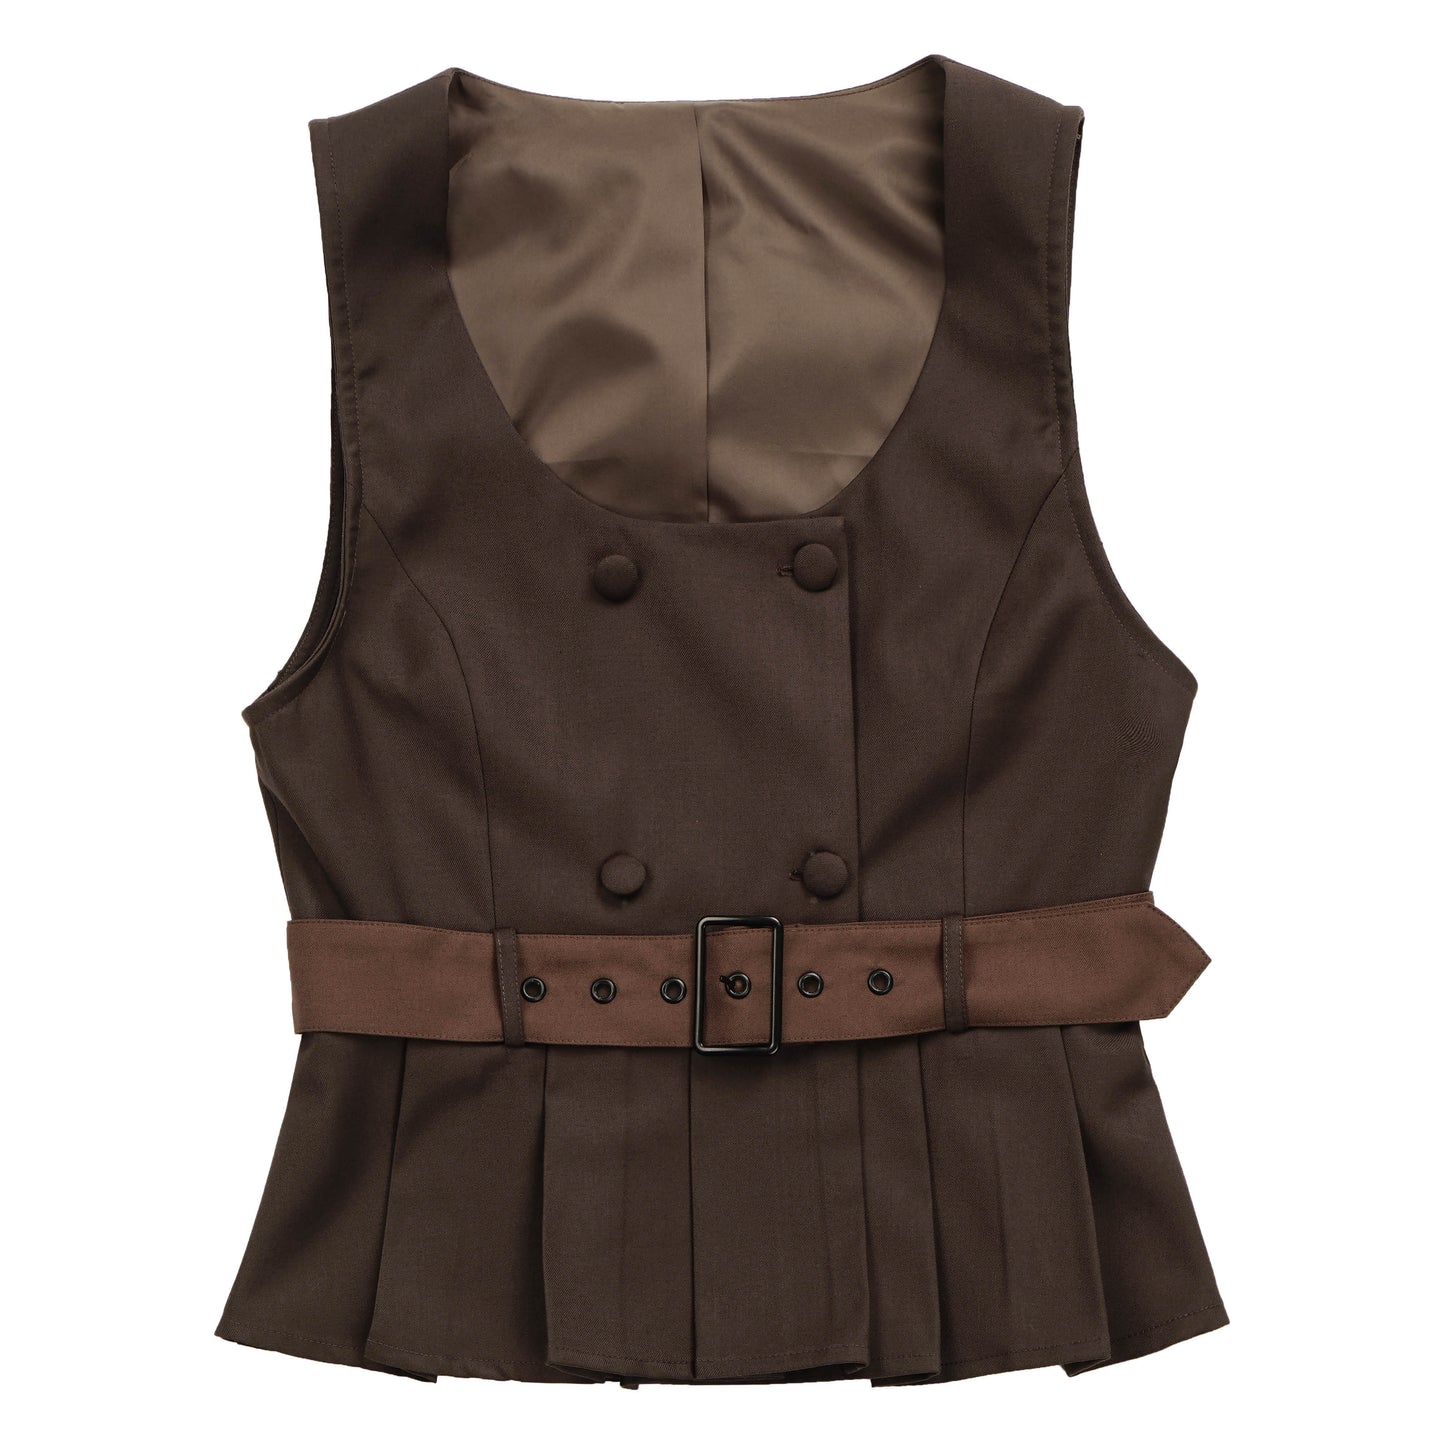 Brown shirt half skirt college design setup